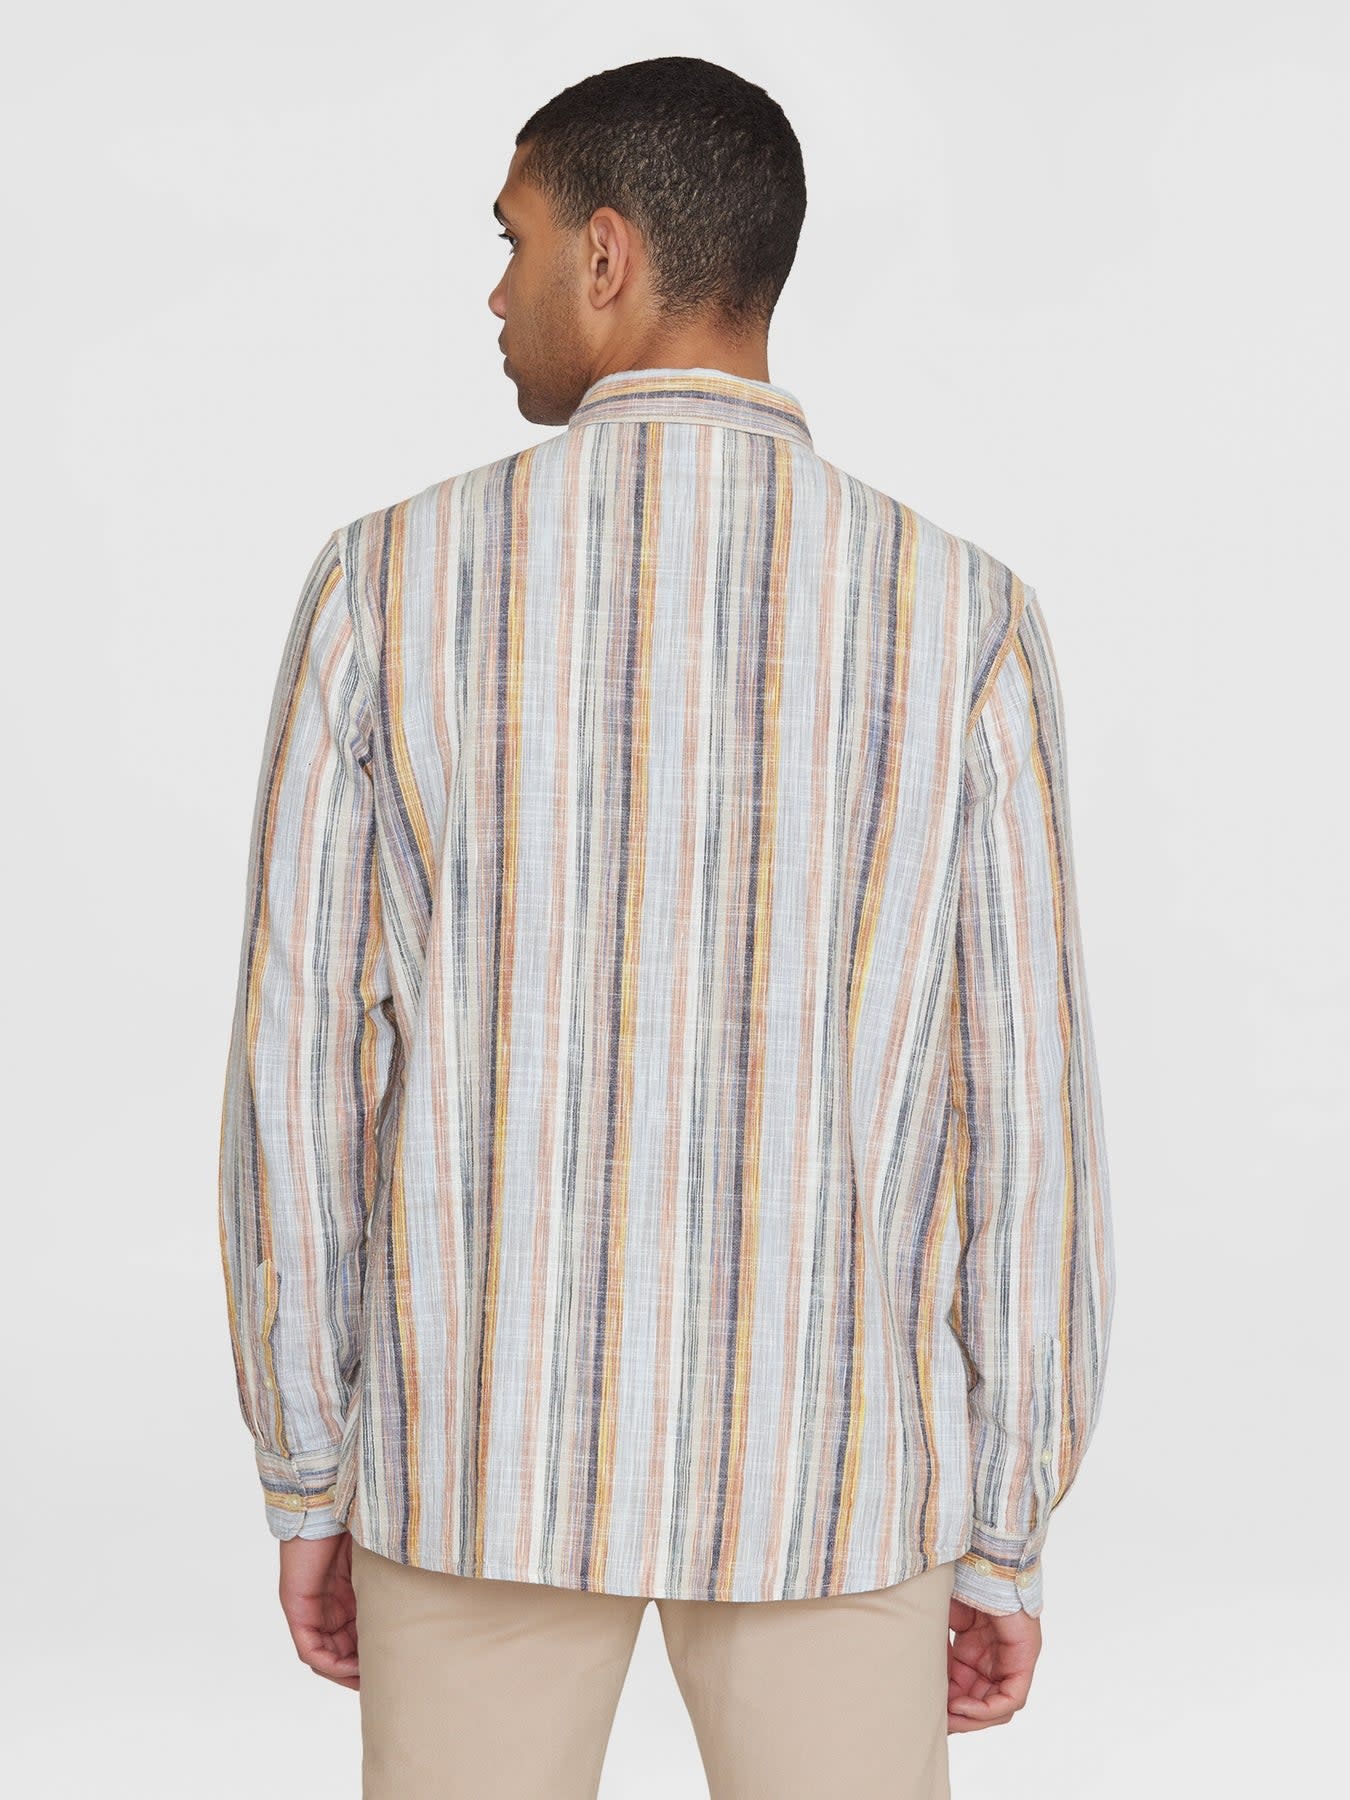 KnowledgeCotton Apparel KnowledgeCotton, Loose Striped Linen Shirt, multicolored, L